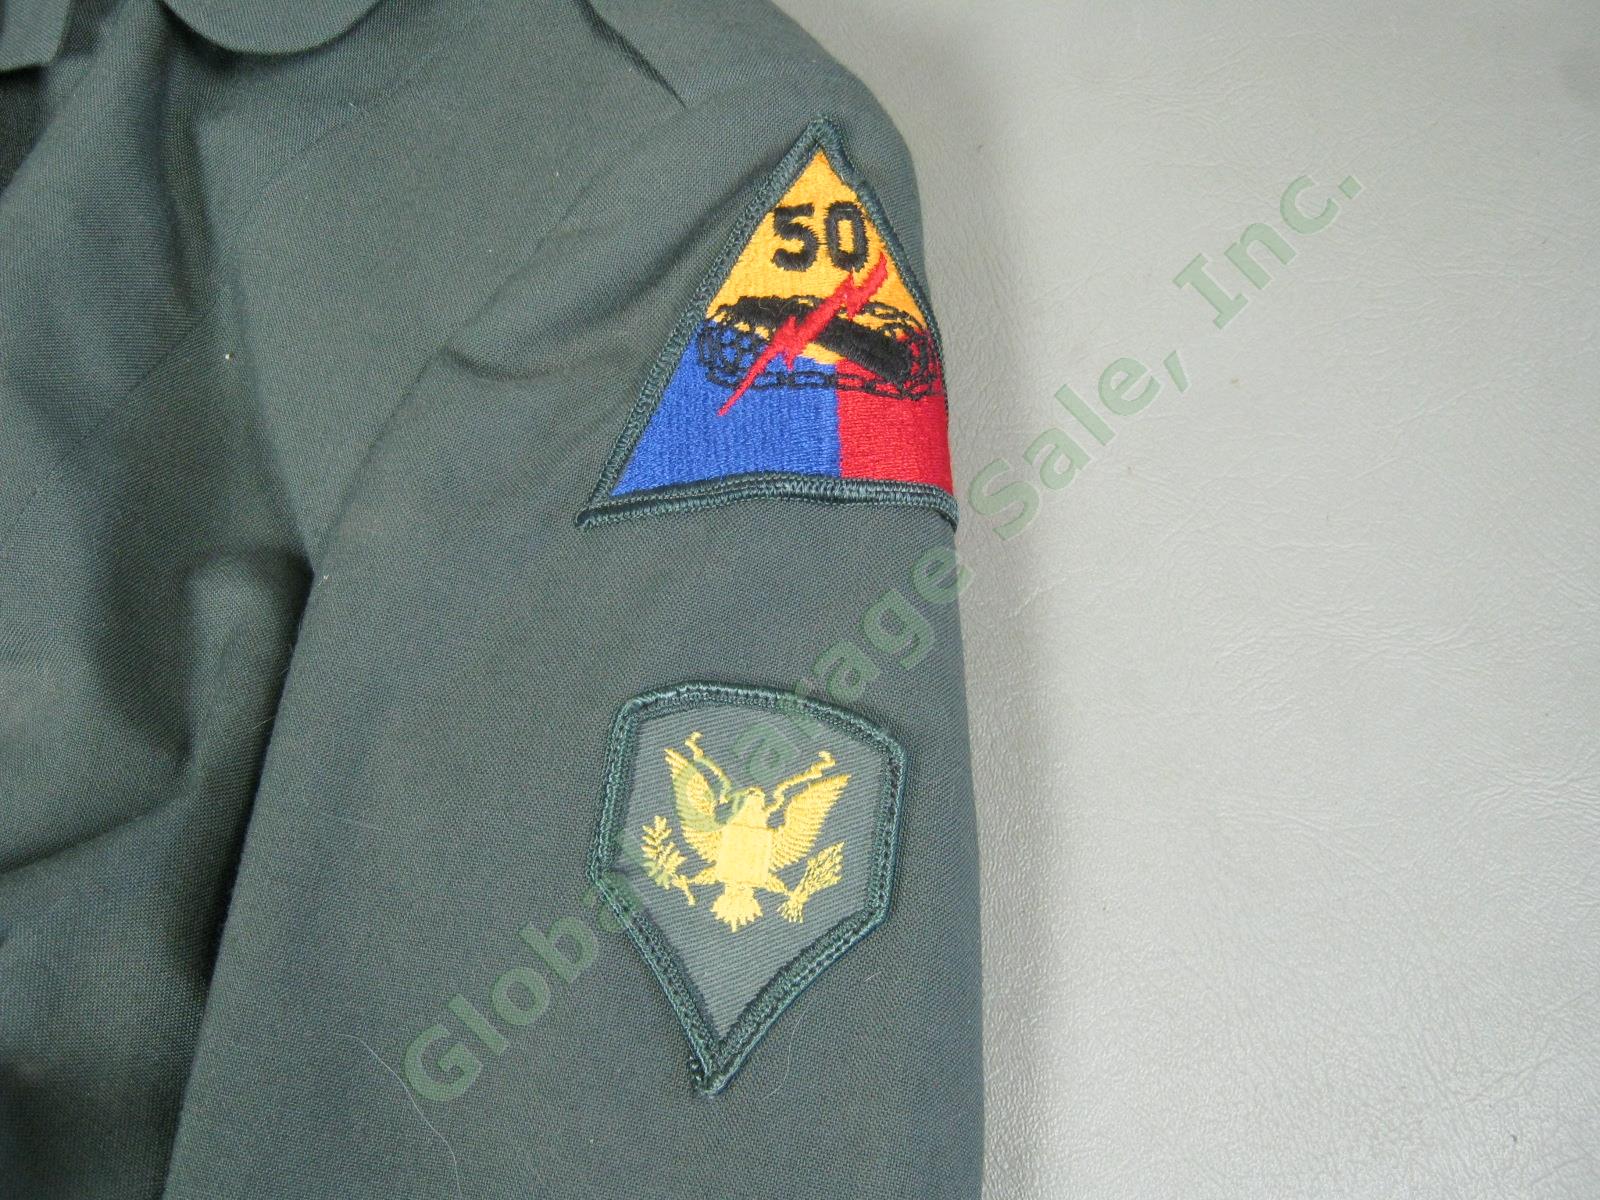 Vtg Womens Army Corps WAC Uniform Lot Green Cord Skirt Jacket Cap AG-344 Dress 3